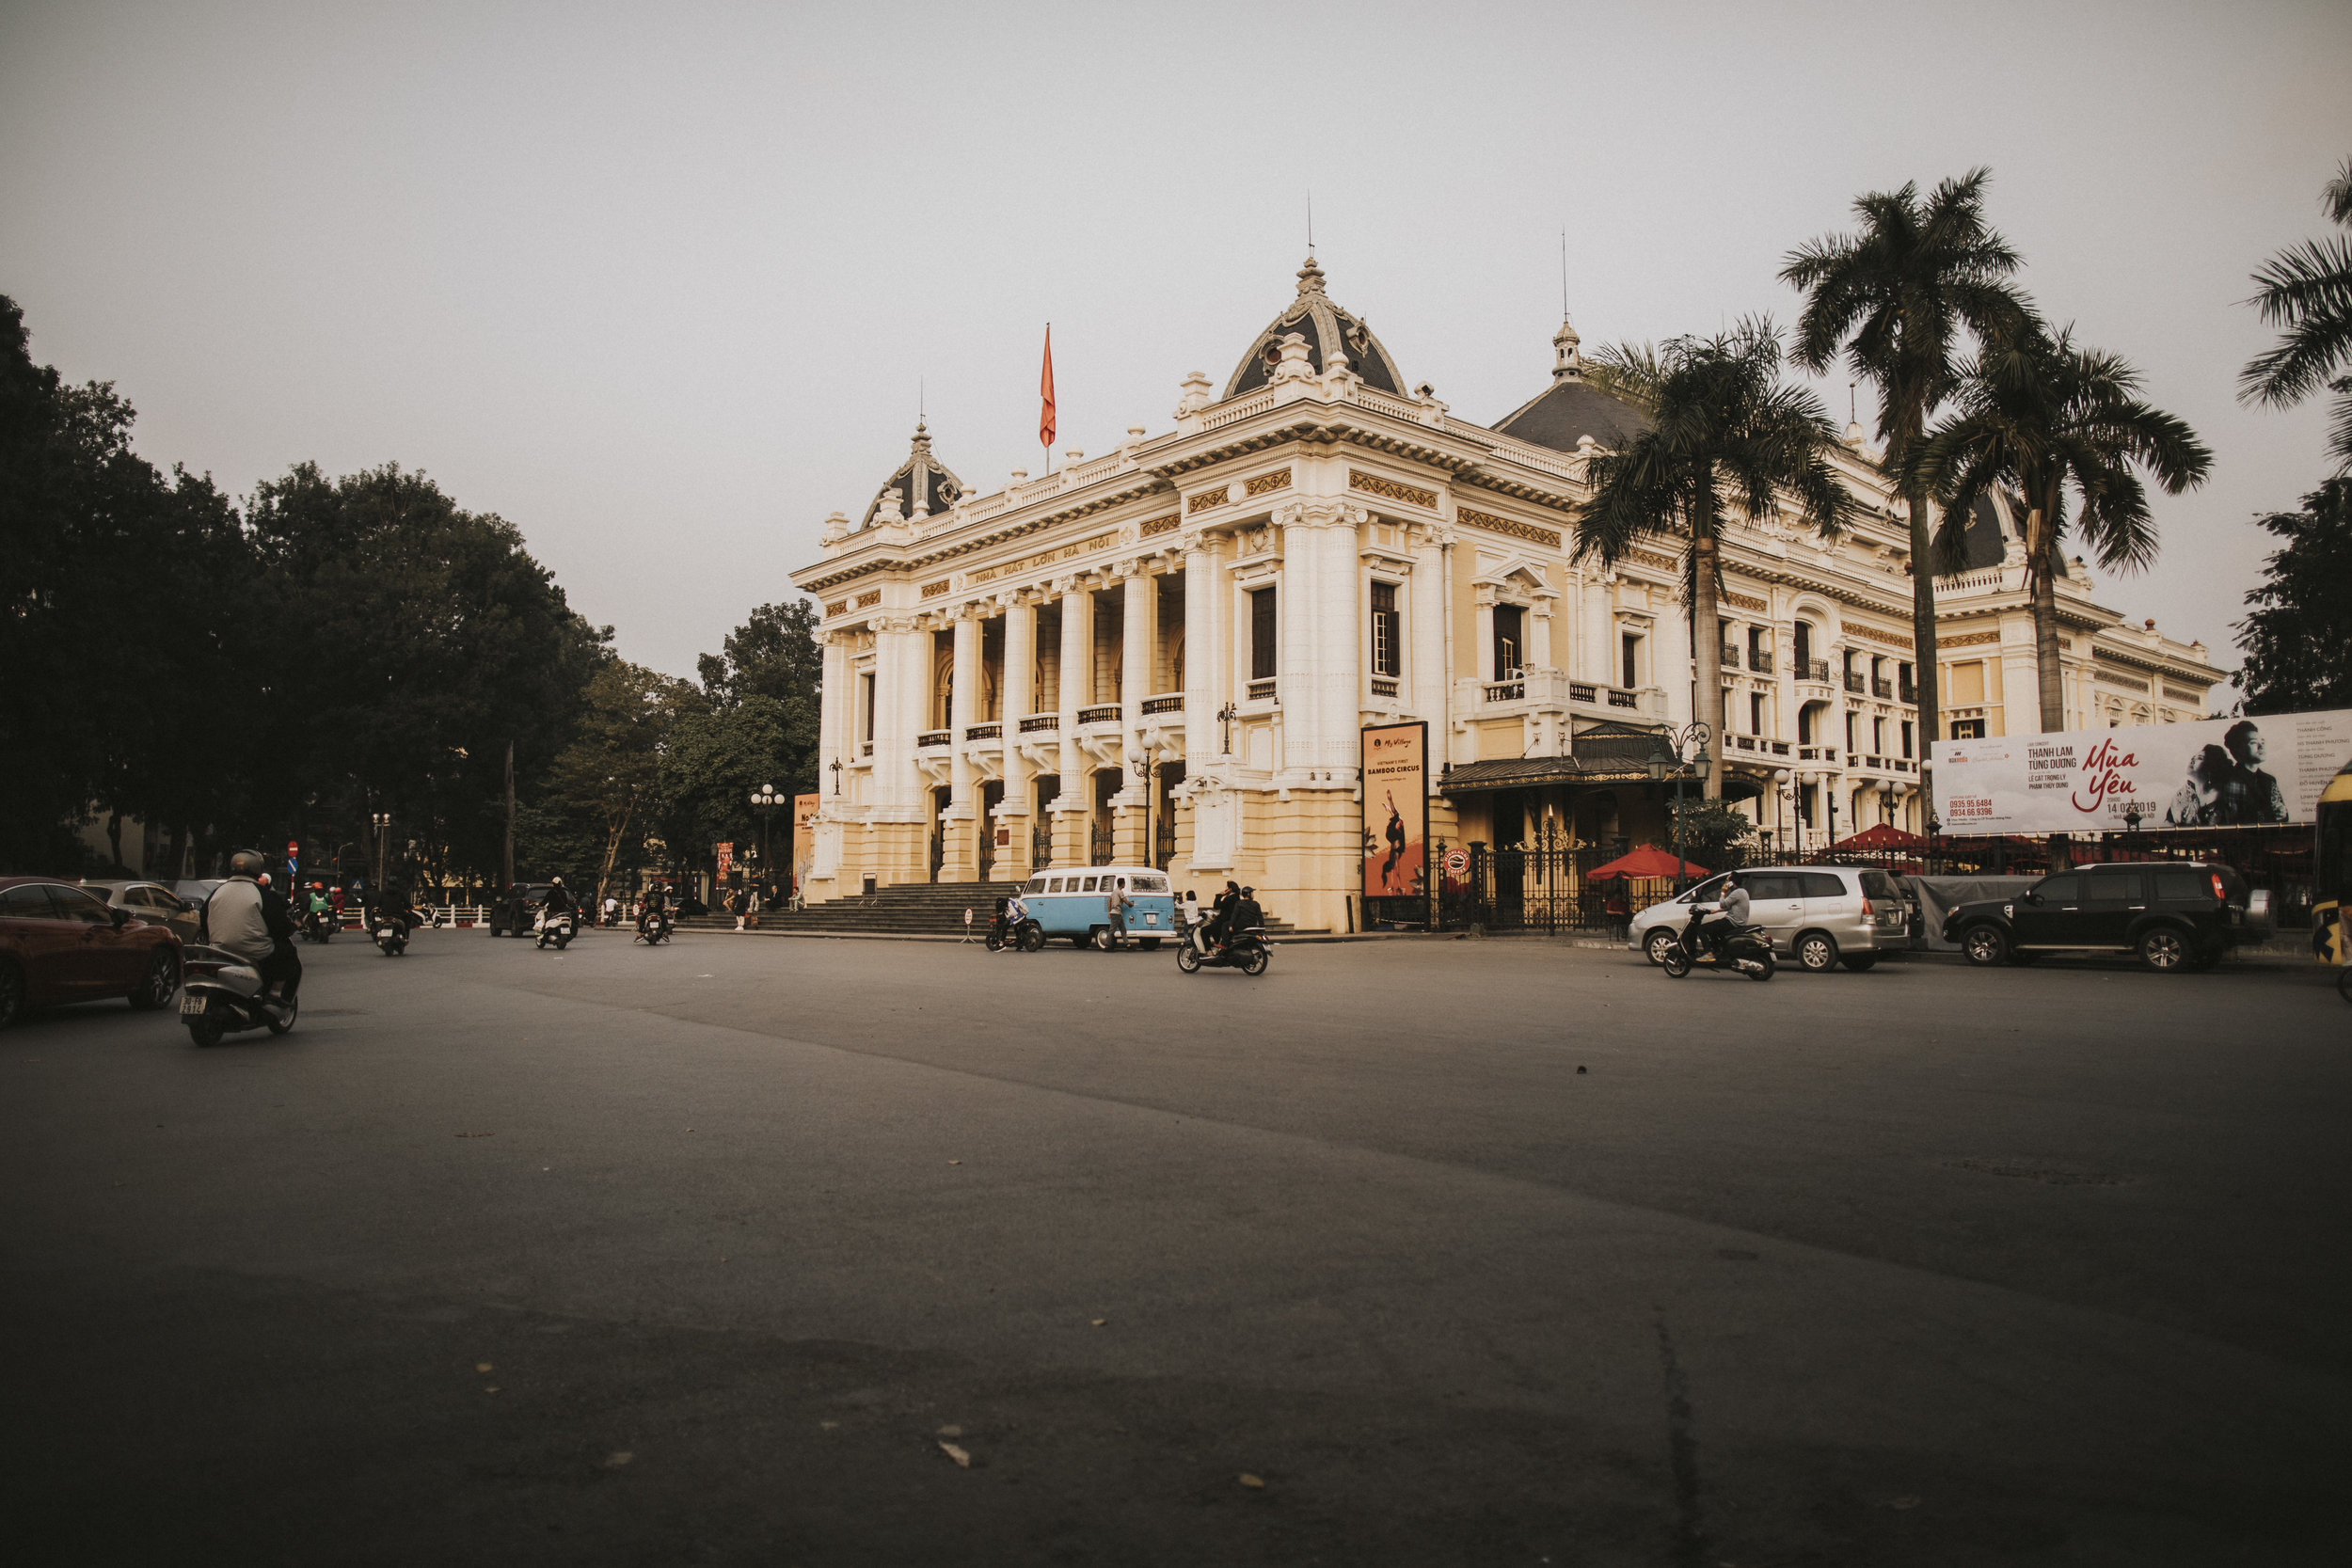 Hanoi's Opera house